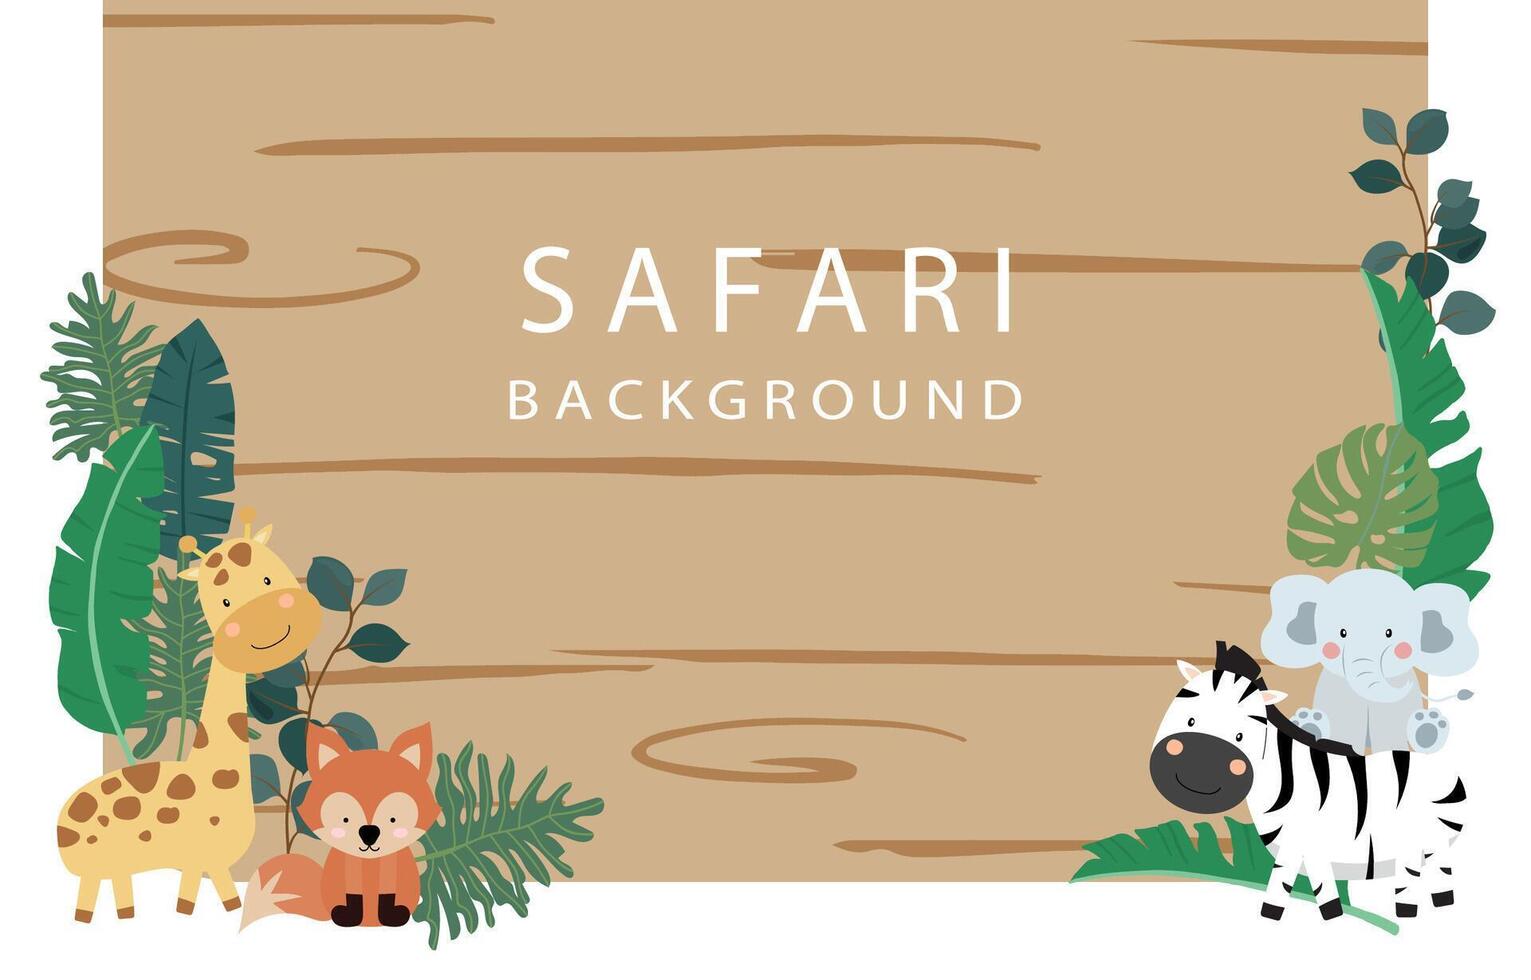 safari banner with giraffe,elephant,zebra,fox and leaf frame vector